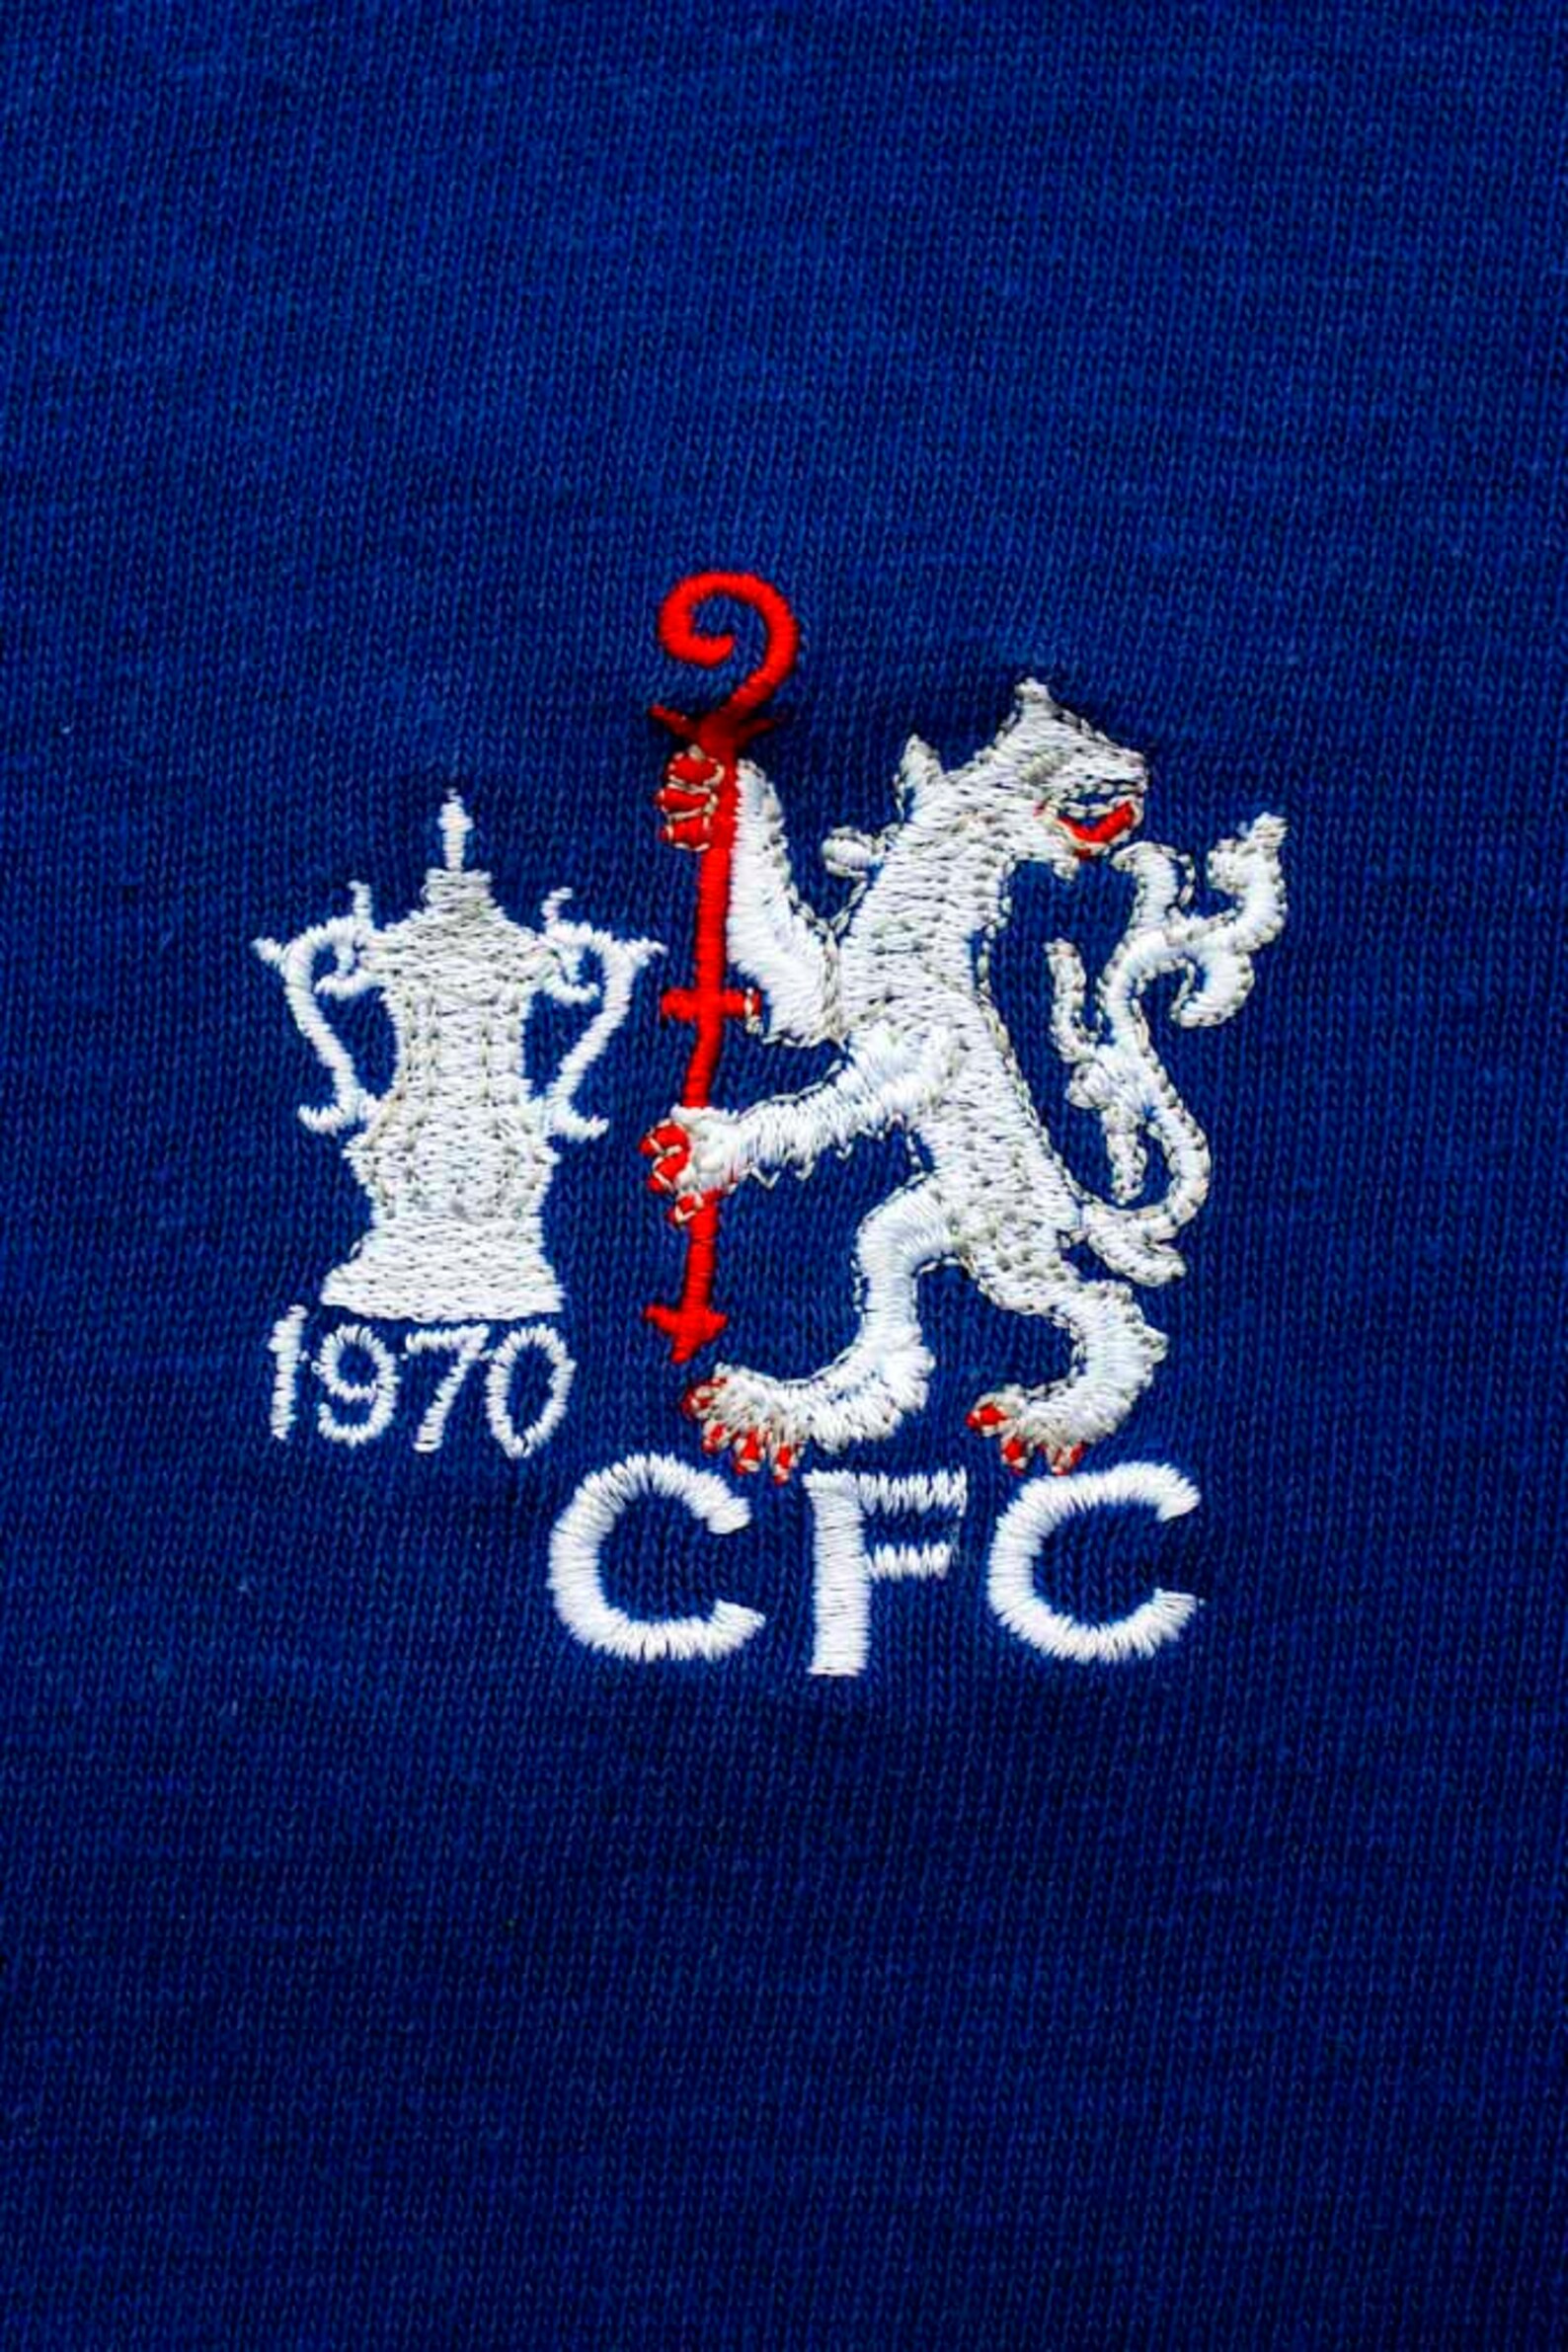 Chelsea Football Club 1970 FA Cup Shirt Badge Crest Photograph - Etsy